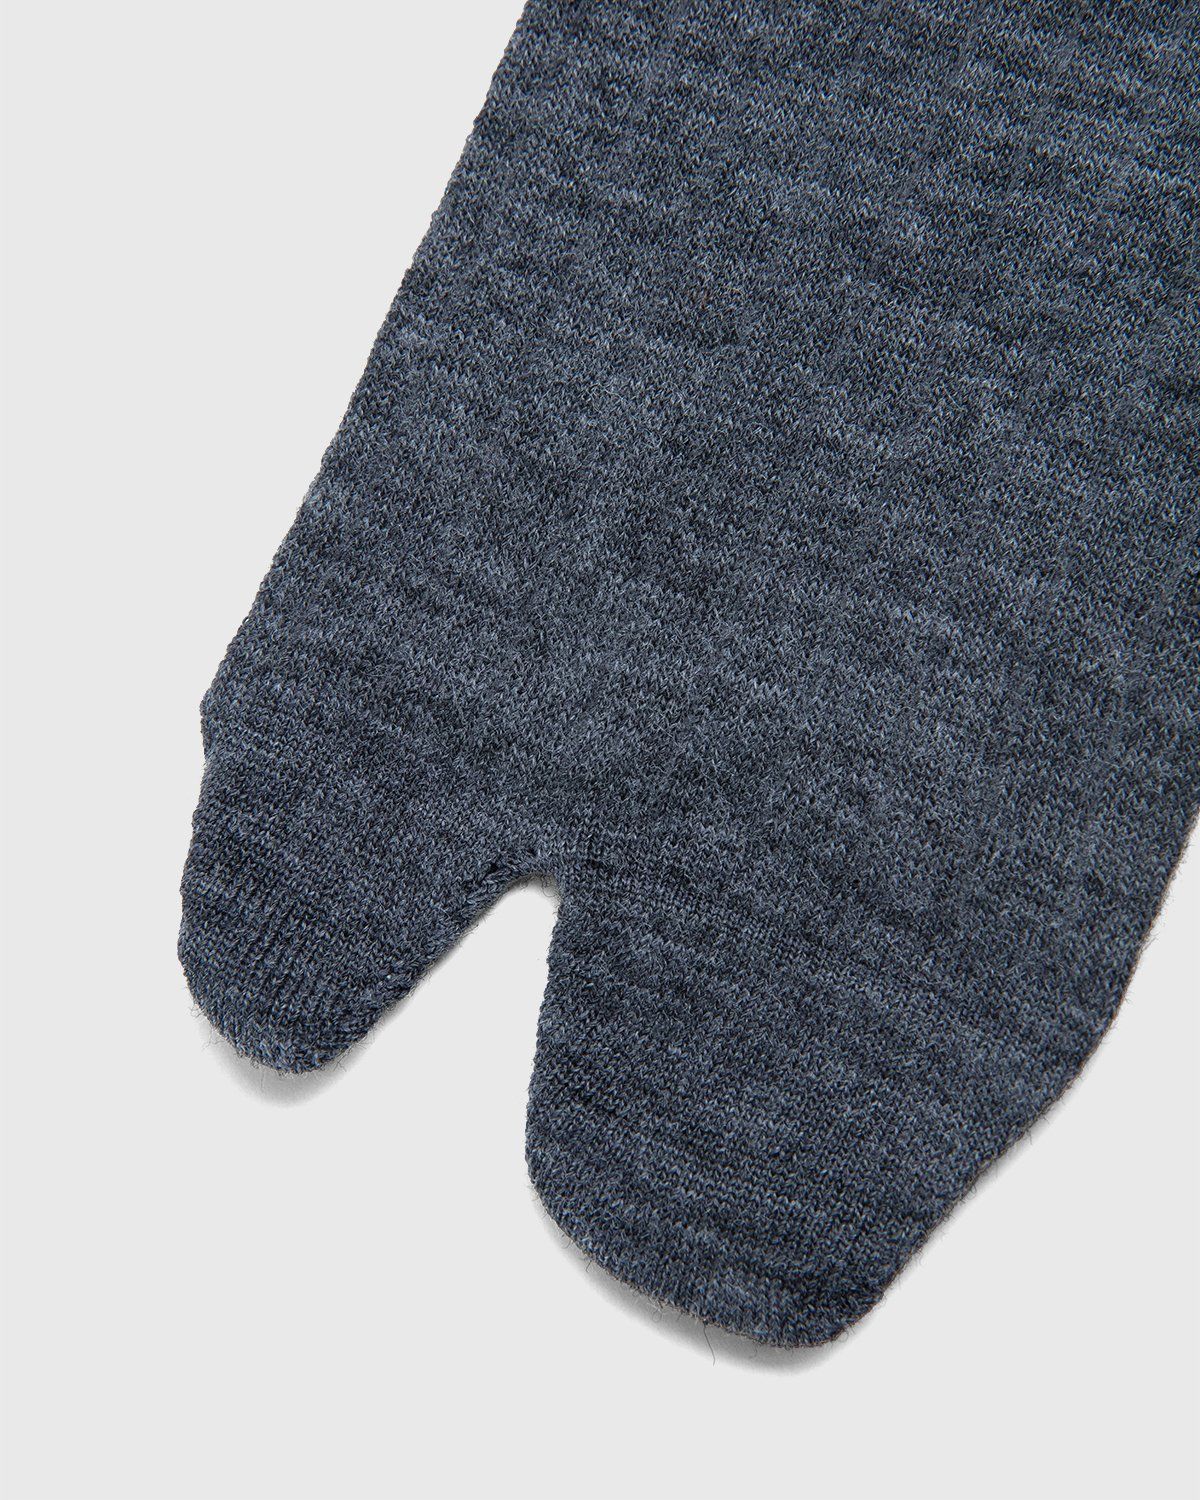 Maison Margiela – Tabi Socks Grey - Socks - Grey - Image 5